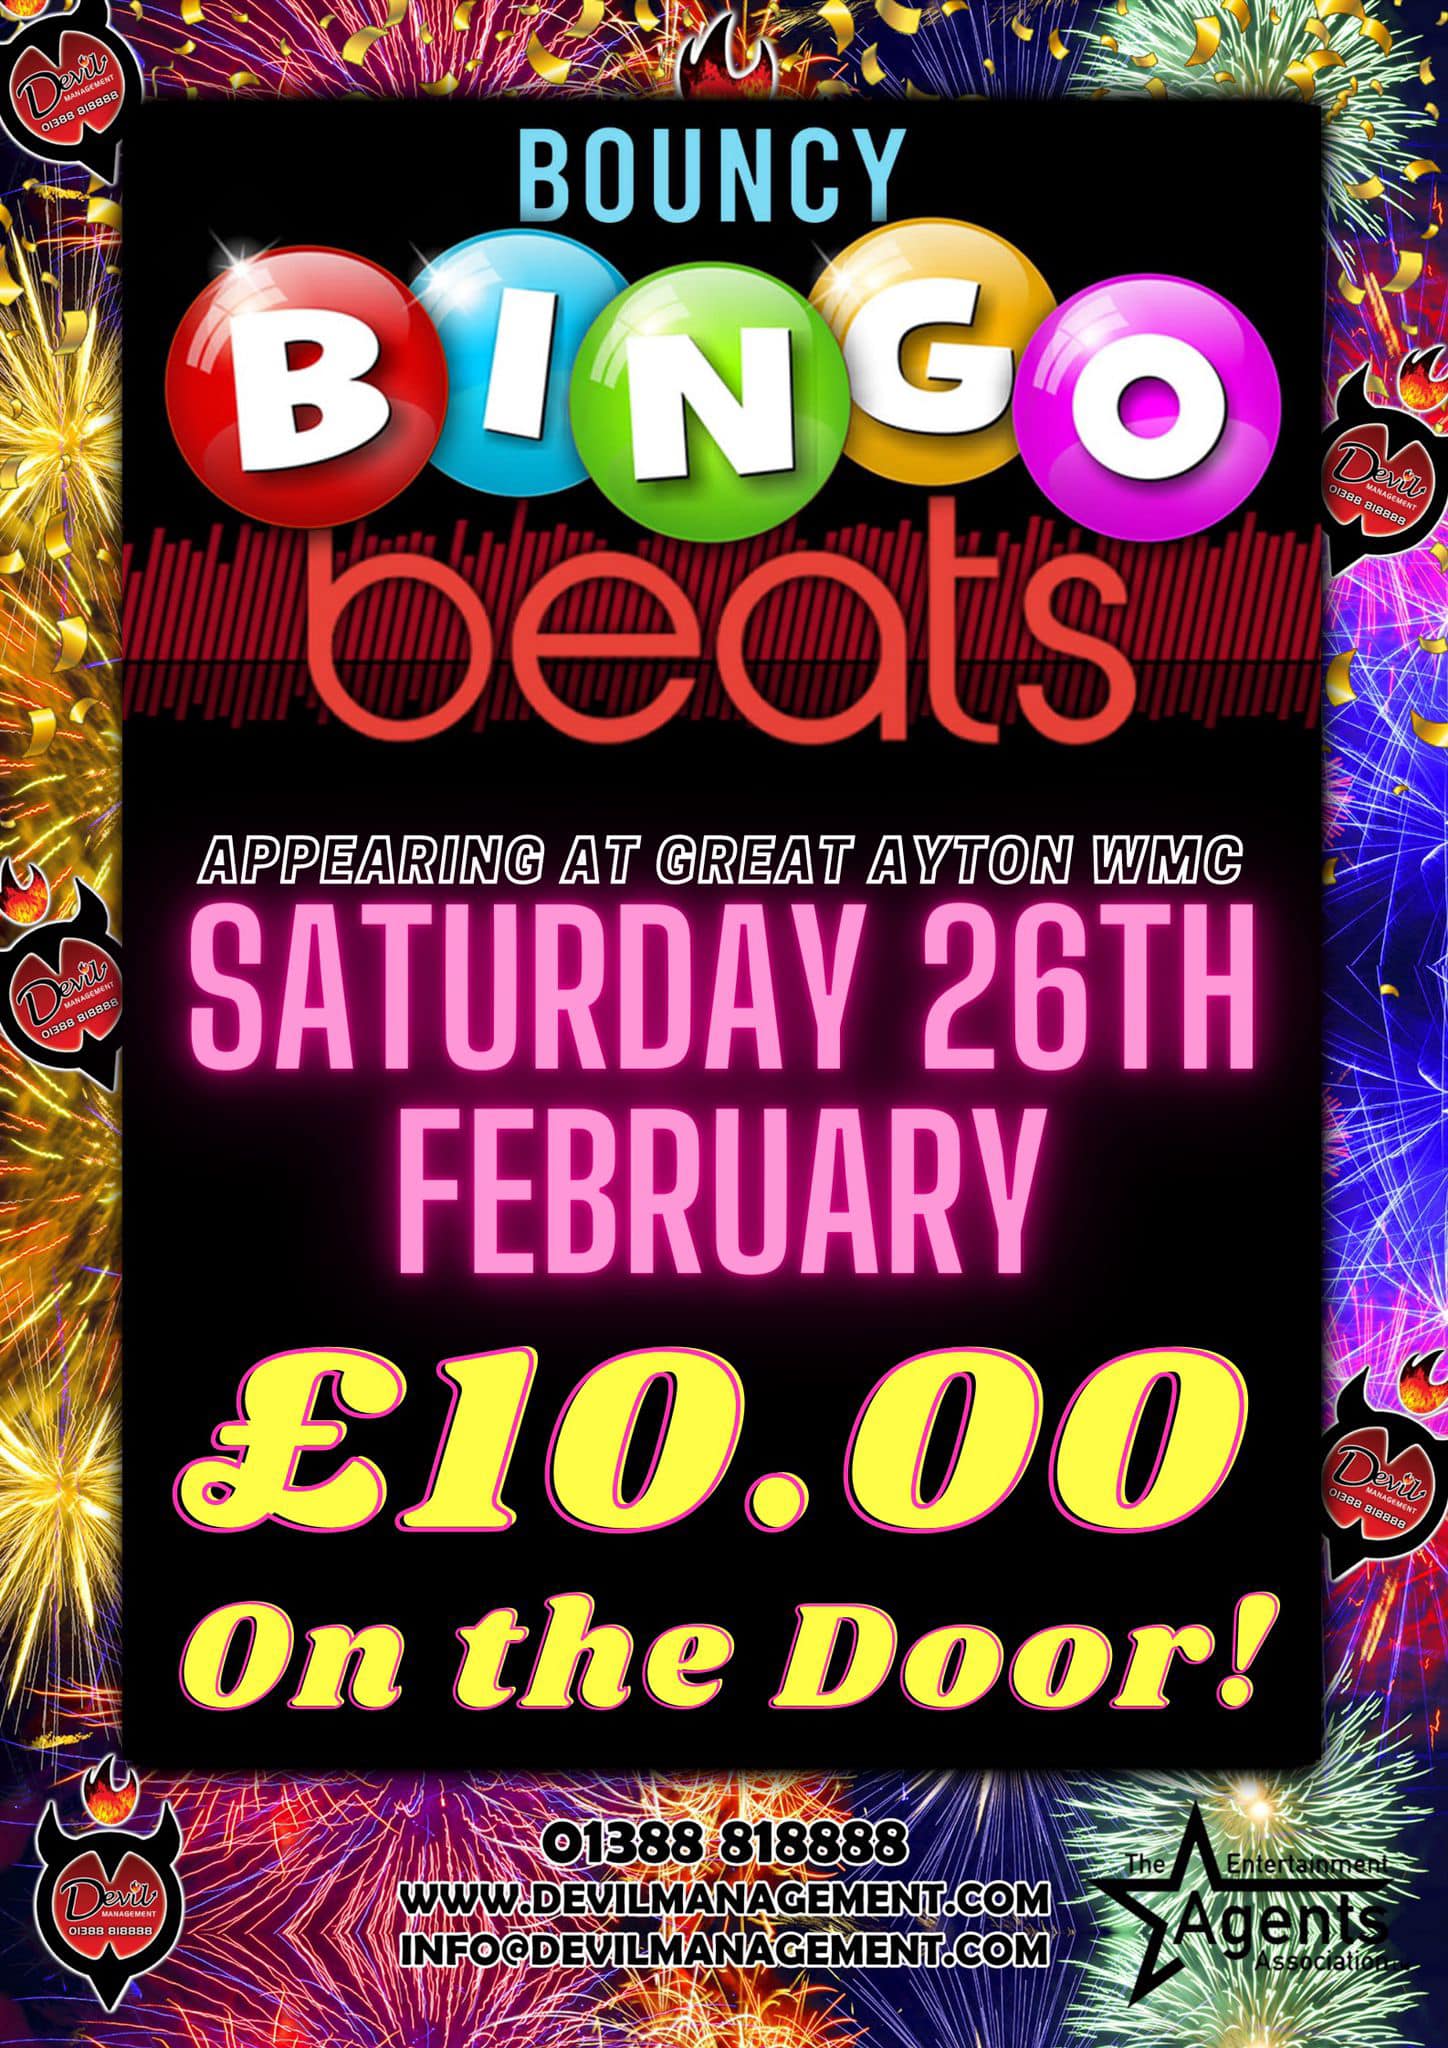 Bouncy Bingo Beats promo poster